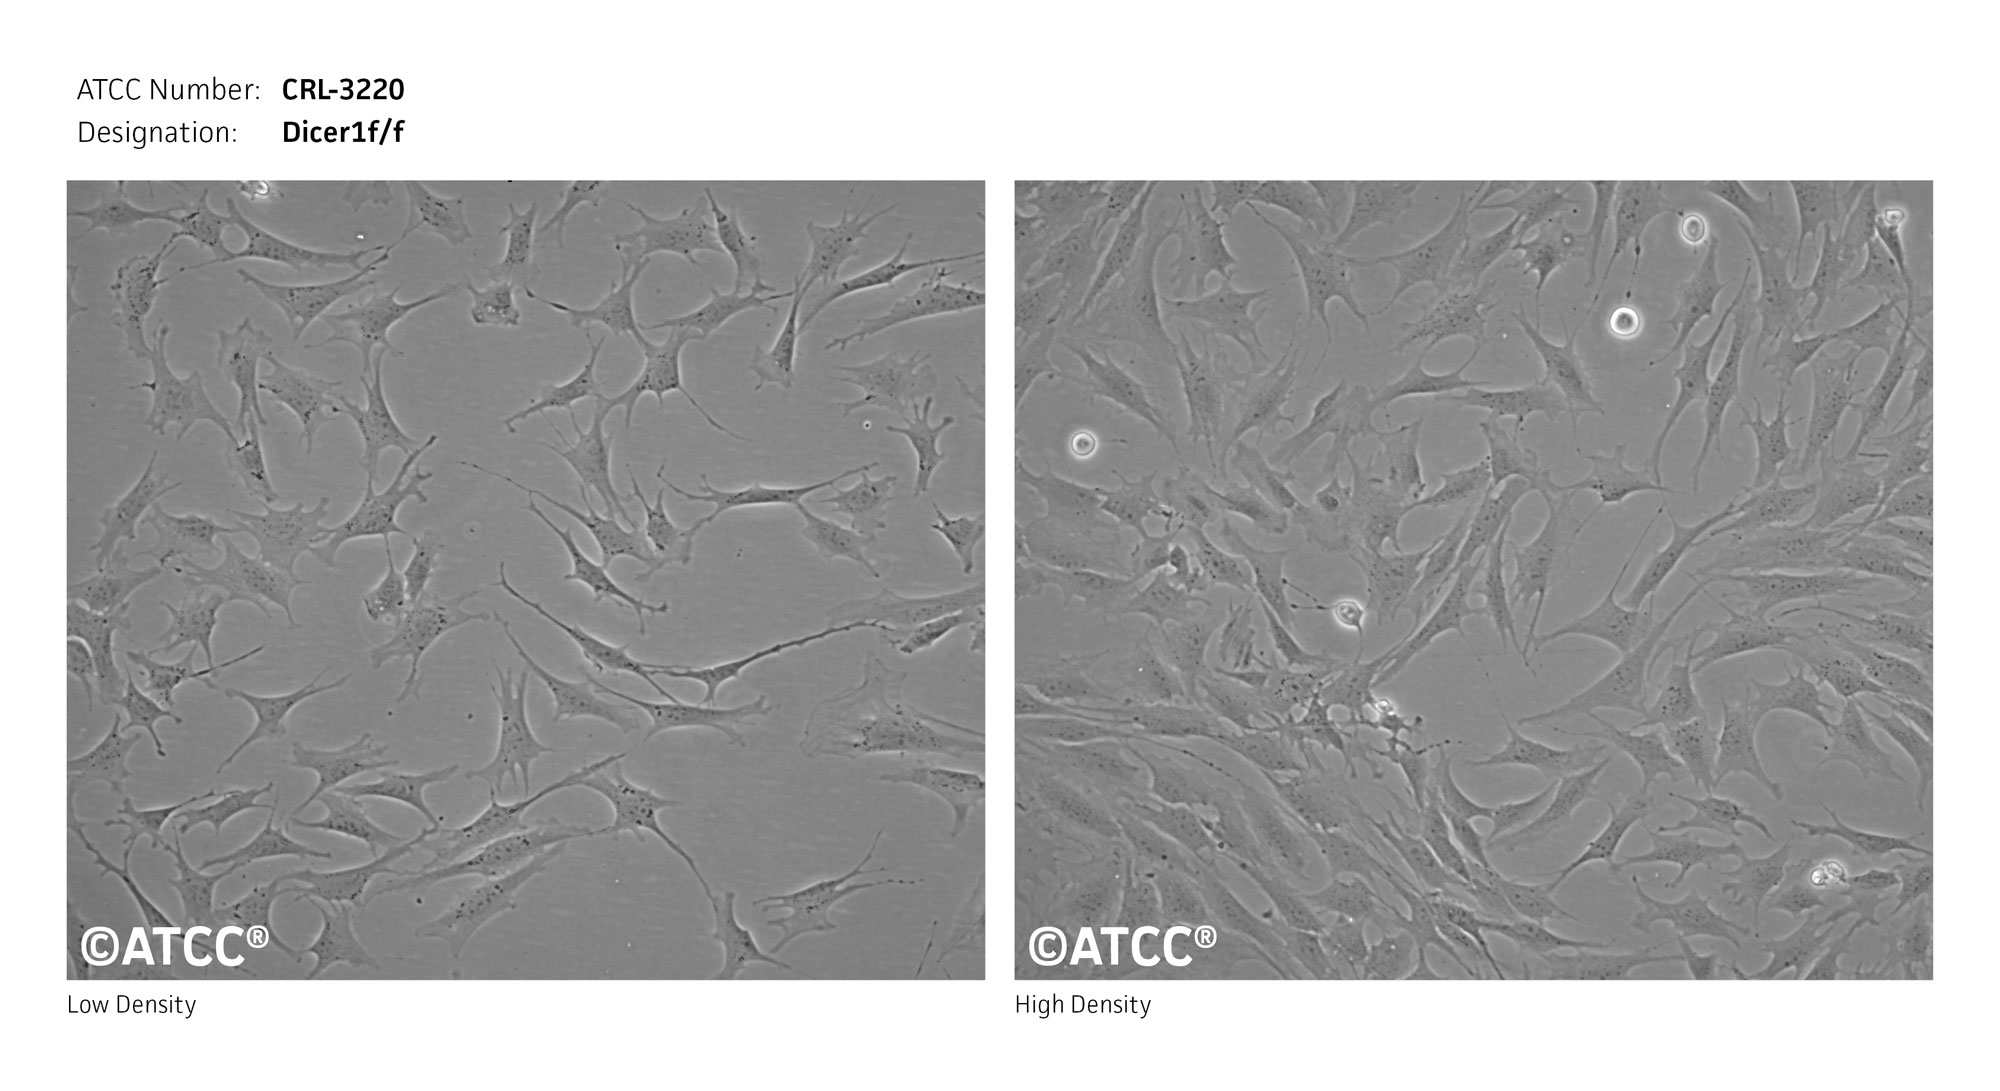 Cell Micrograph of Dicer 1f/f ATCC CRL-3220